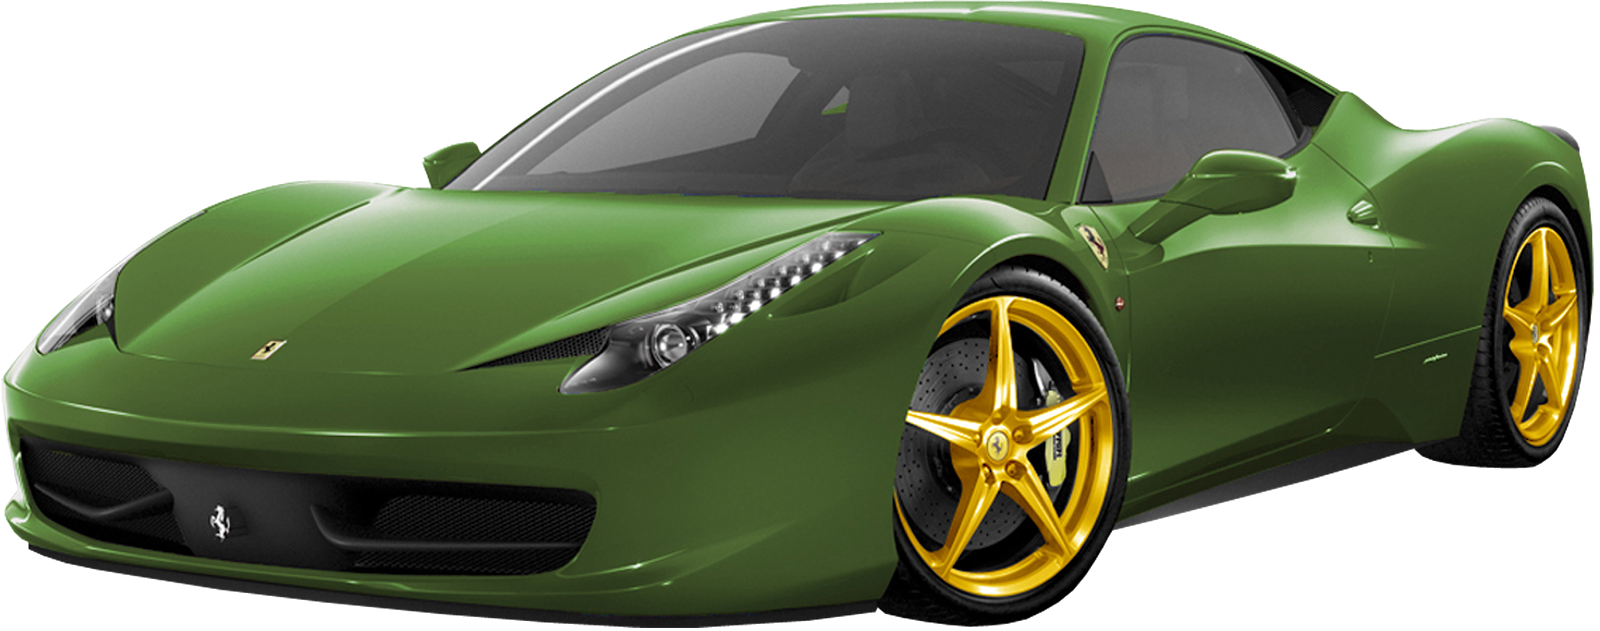 Green ferrari car PNG image